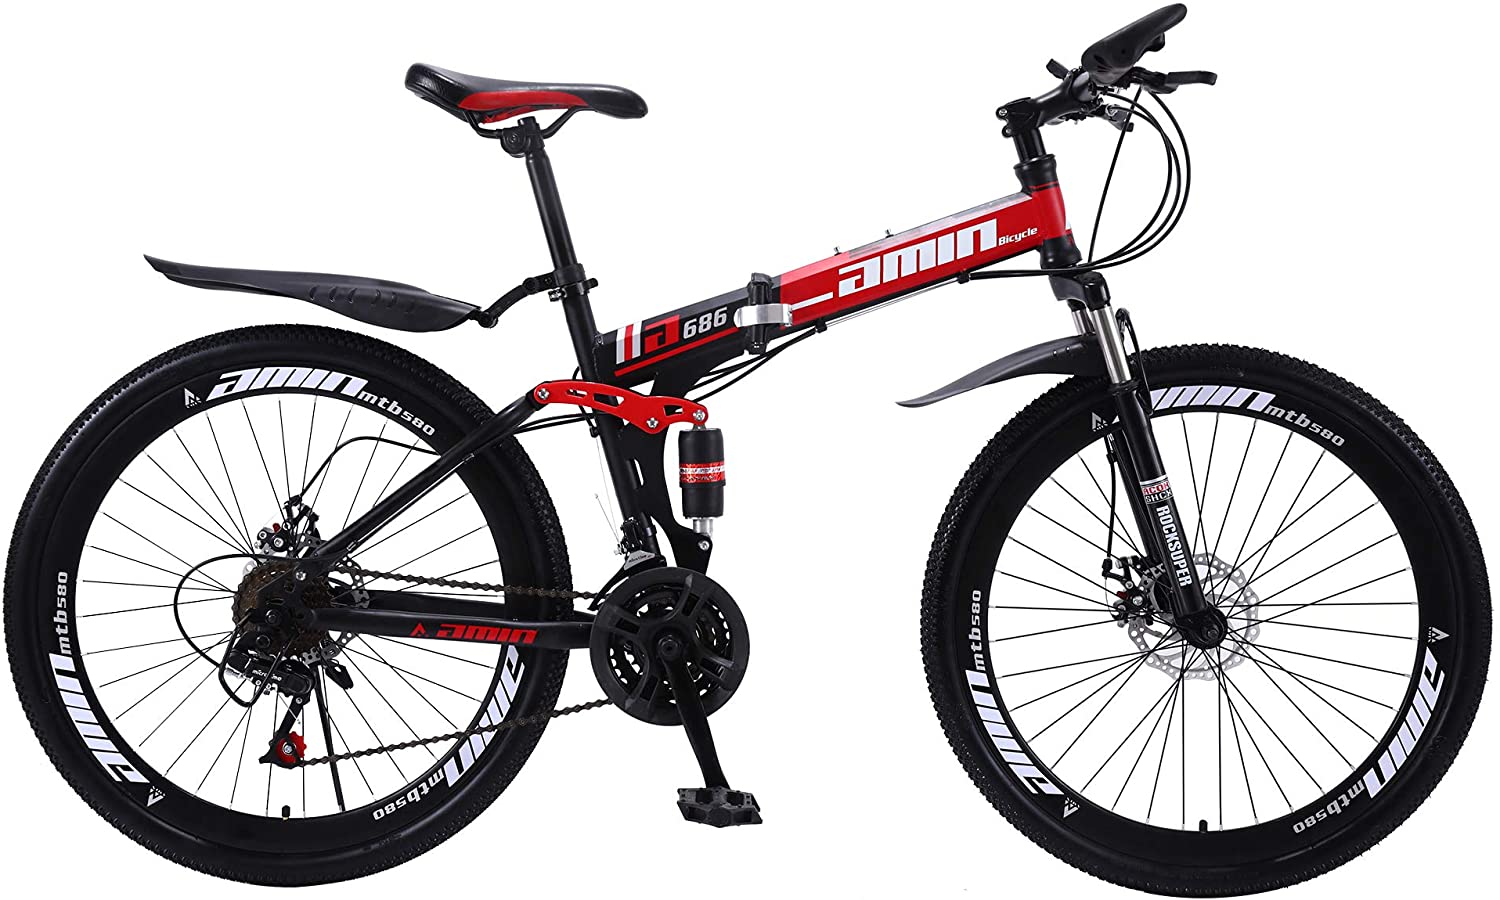 21-Speed Folding Mountain Bike, 26 Inches Spoke Wheel Bicycle, Black-Red - Walmart.com